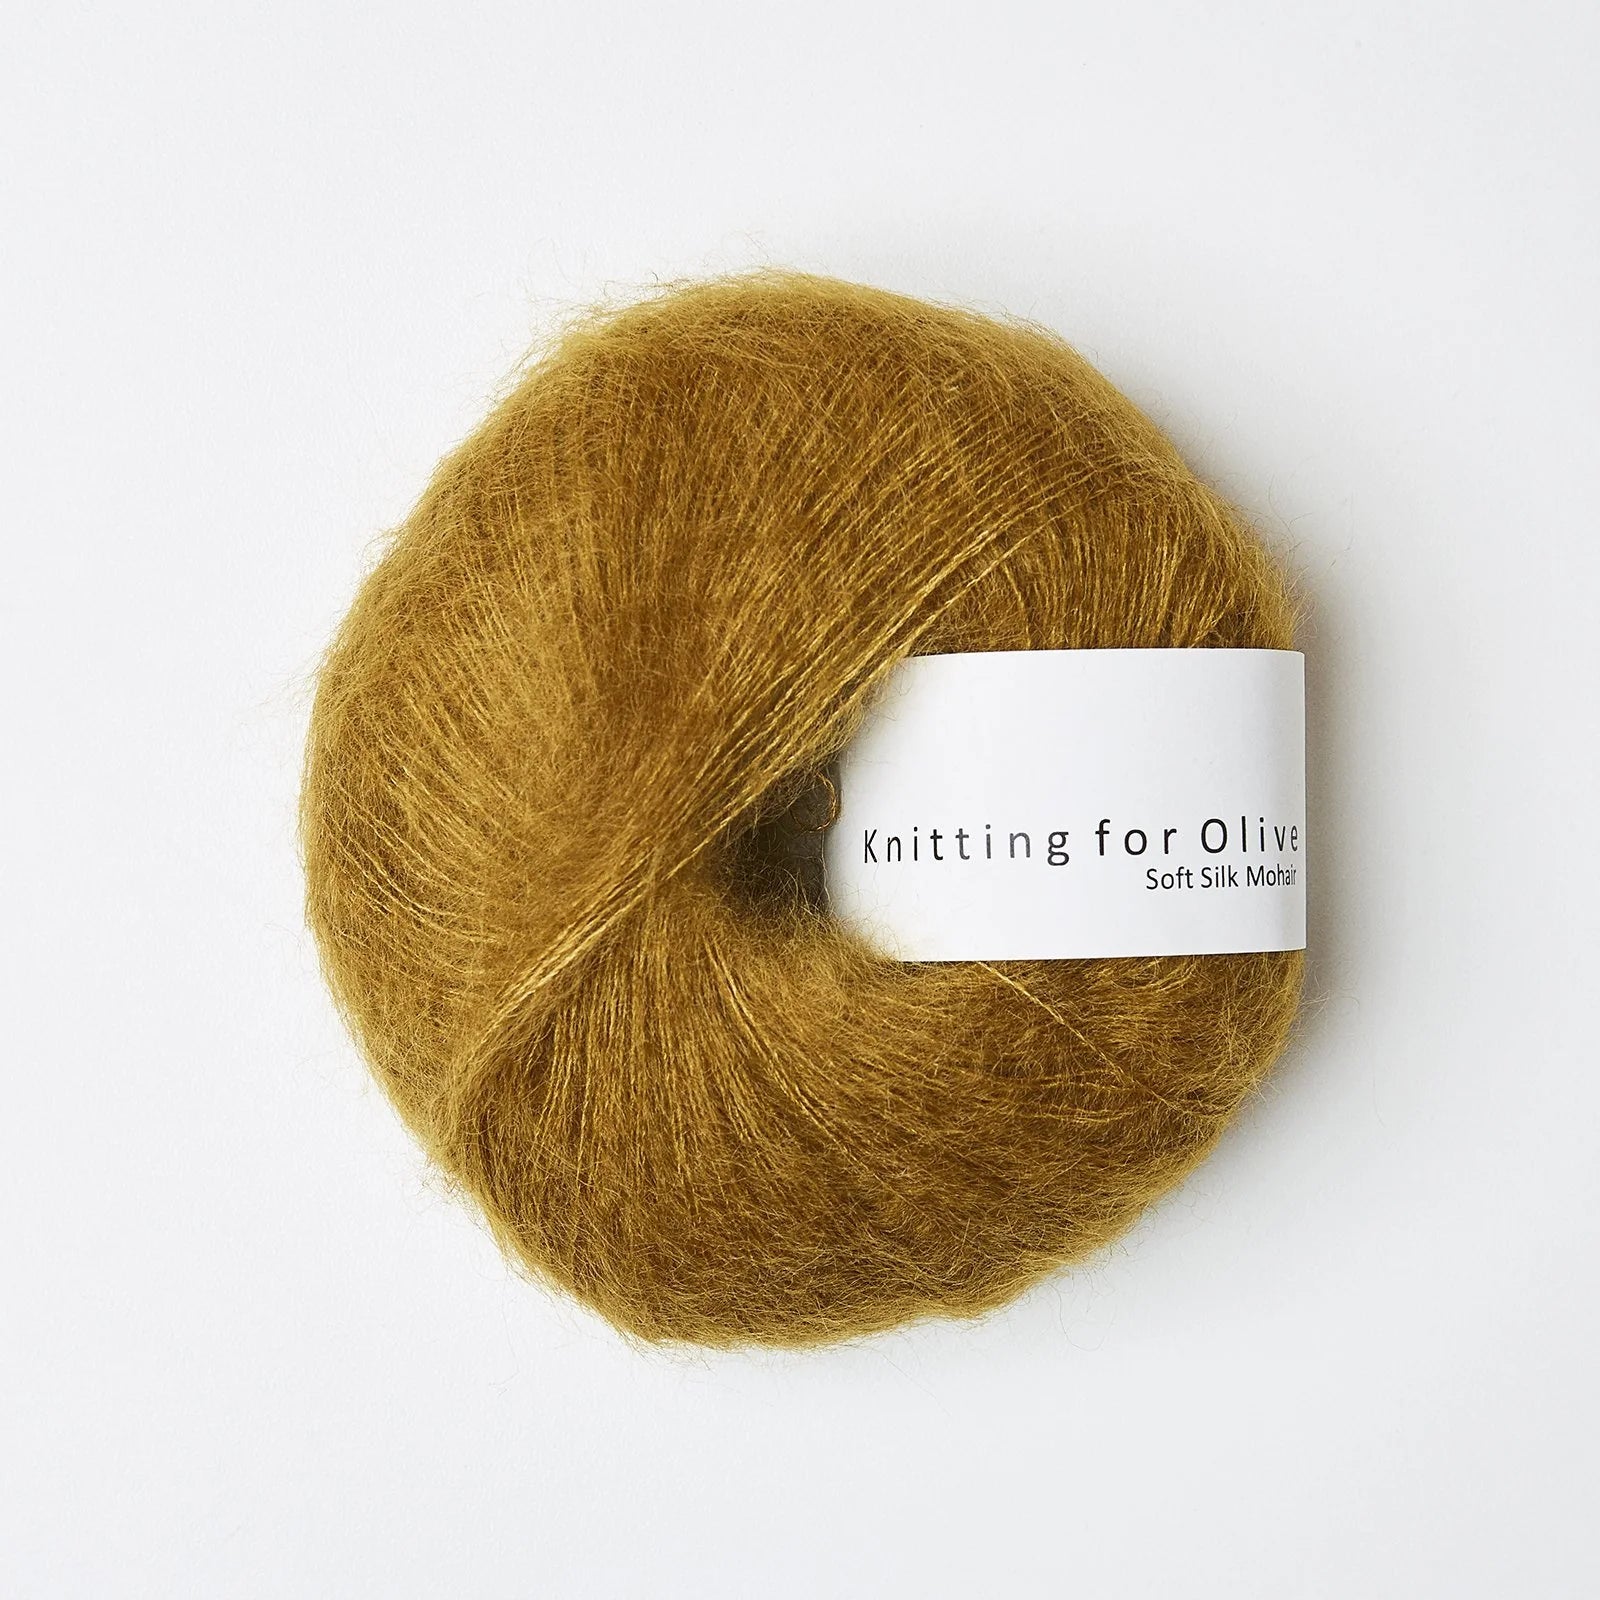 Knitting for Olive Soft Silk Mohair - Knitting for Olive - Dark Mustard - The Little Yarn Store